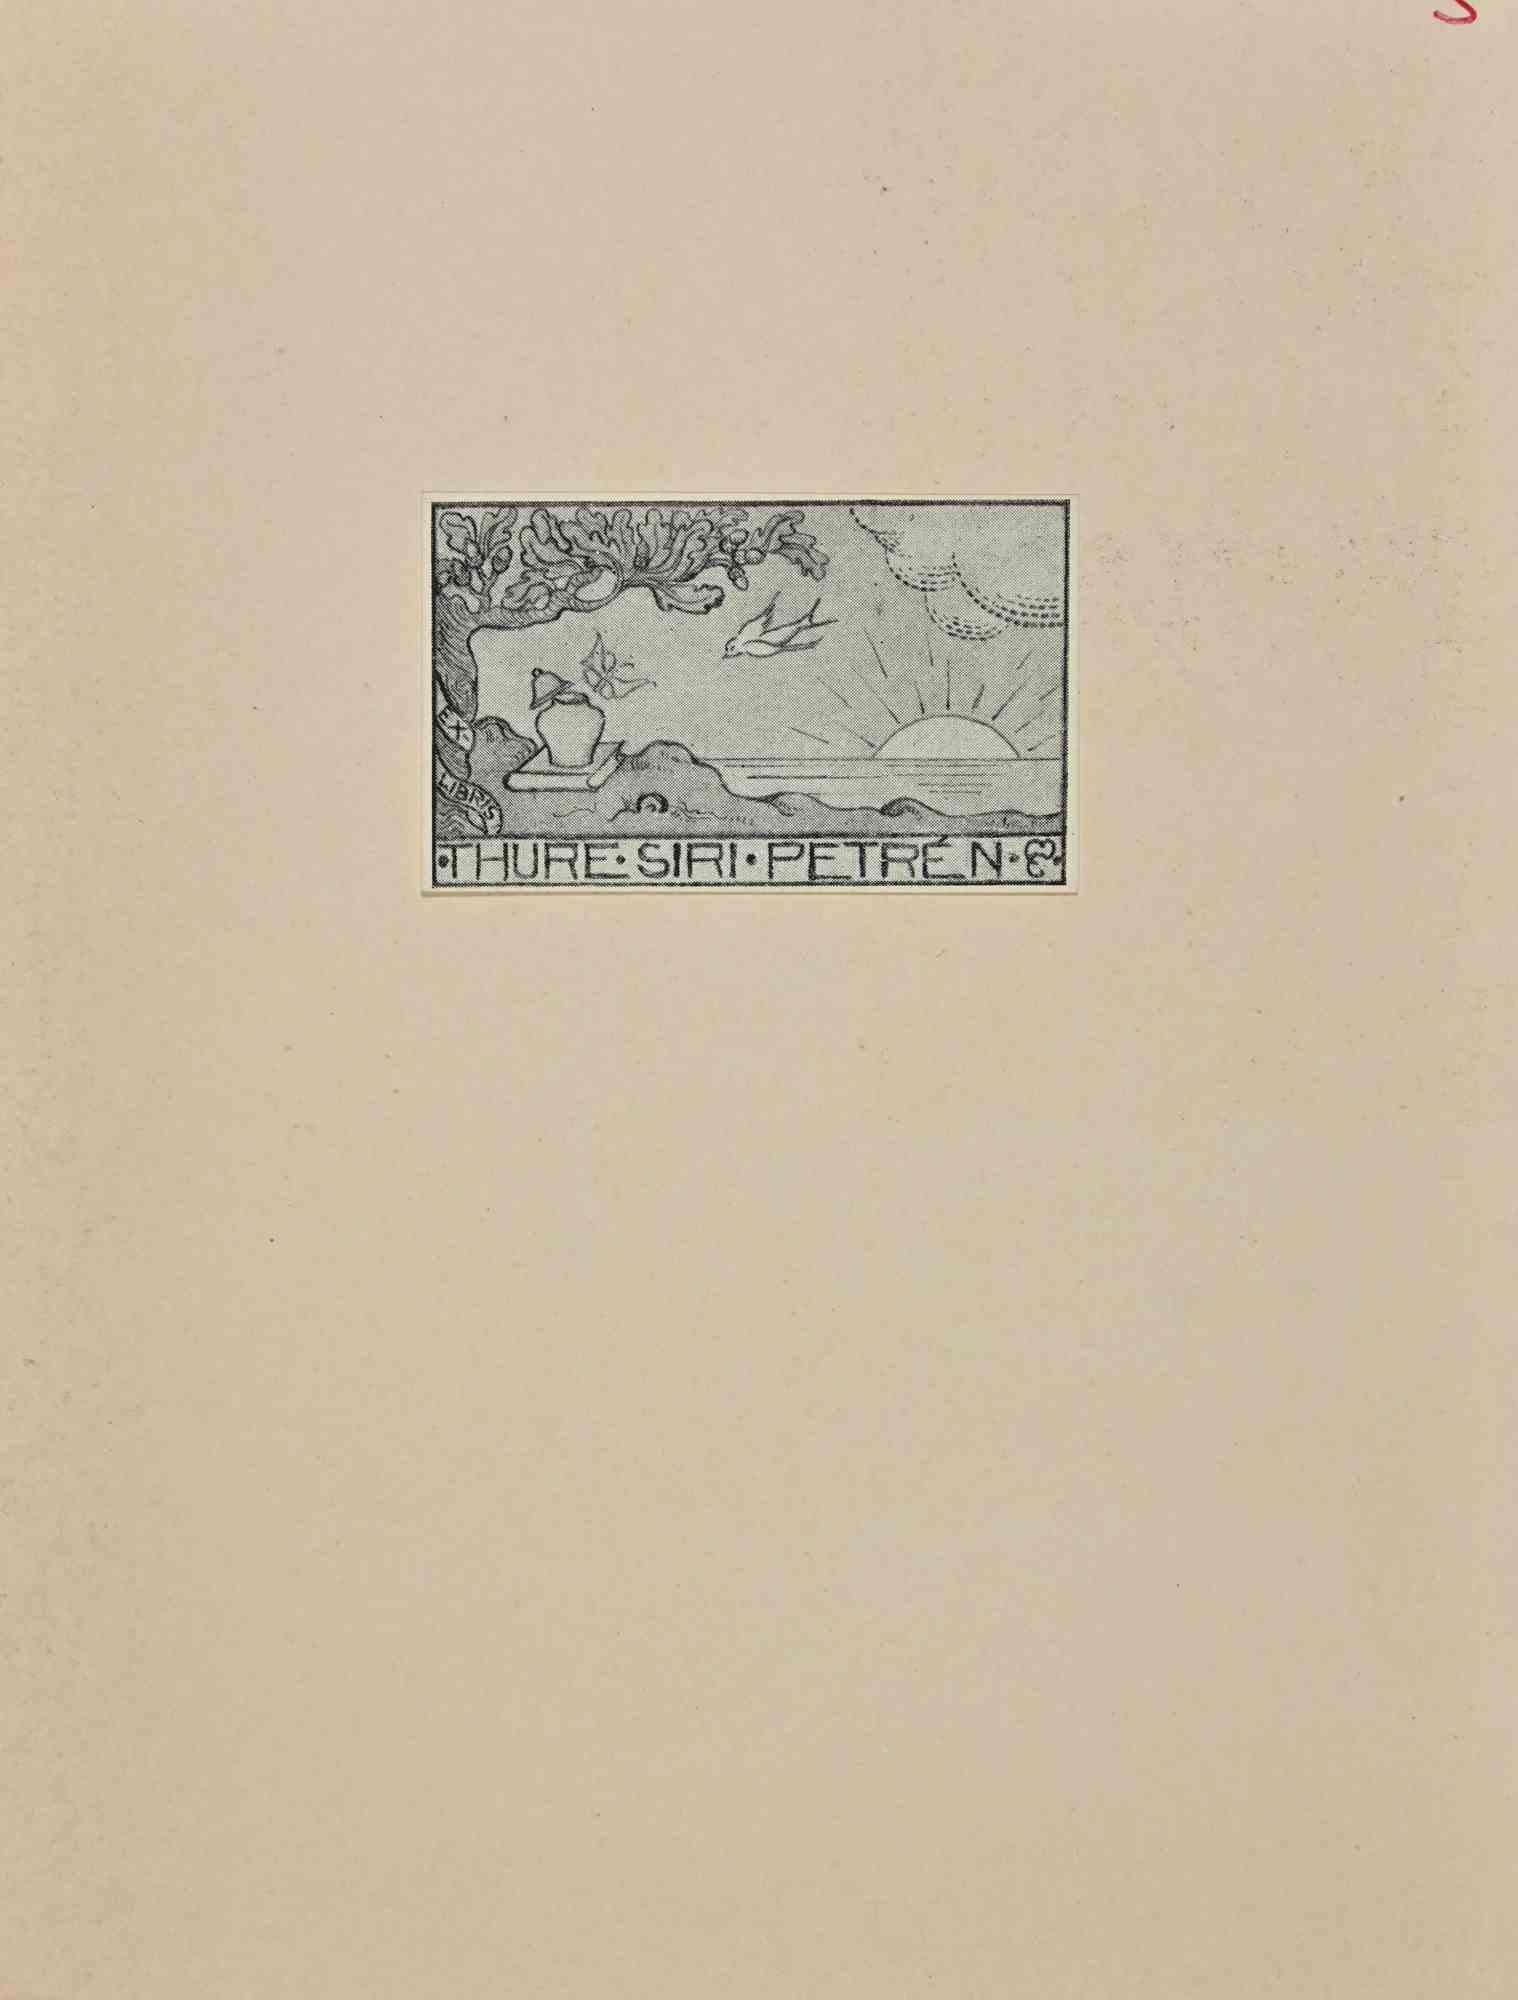 Unknown Figurative Print - Ex Libris - Thure Siri Petrén - Woodcut - Mid 20th Century